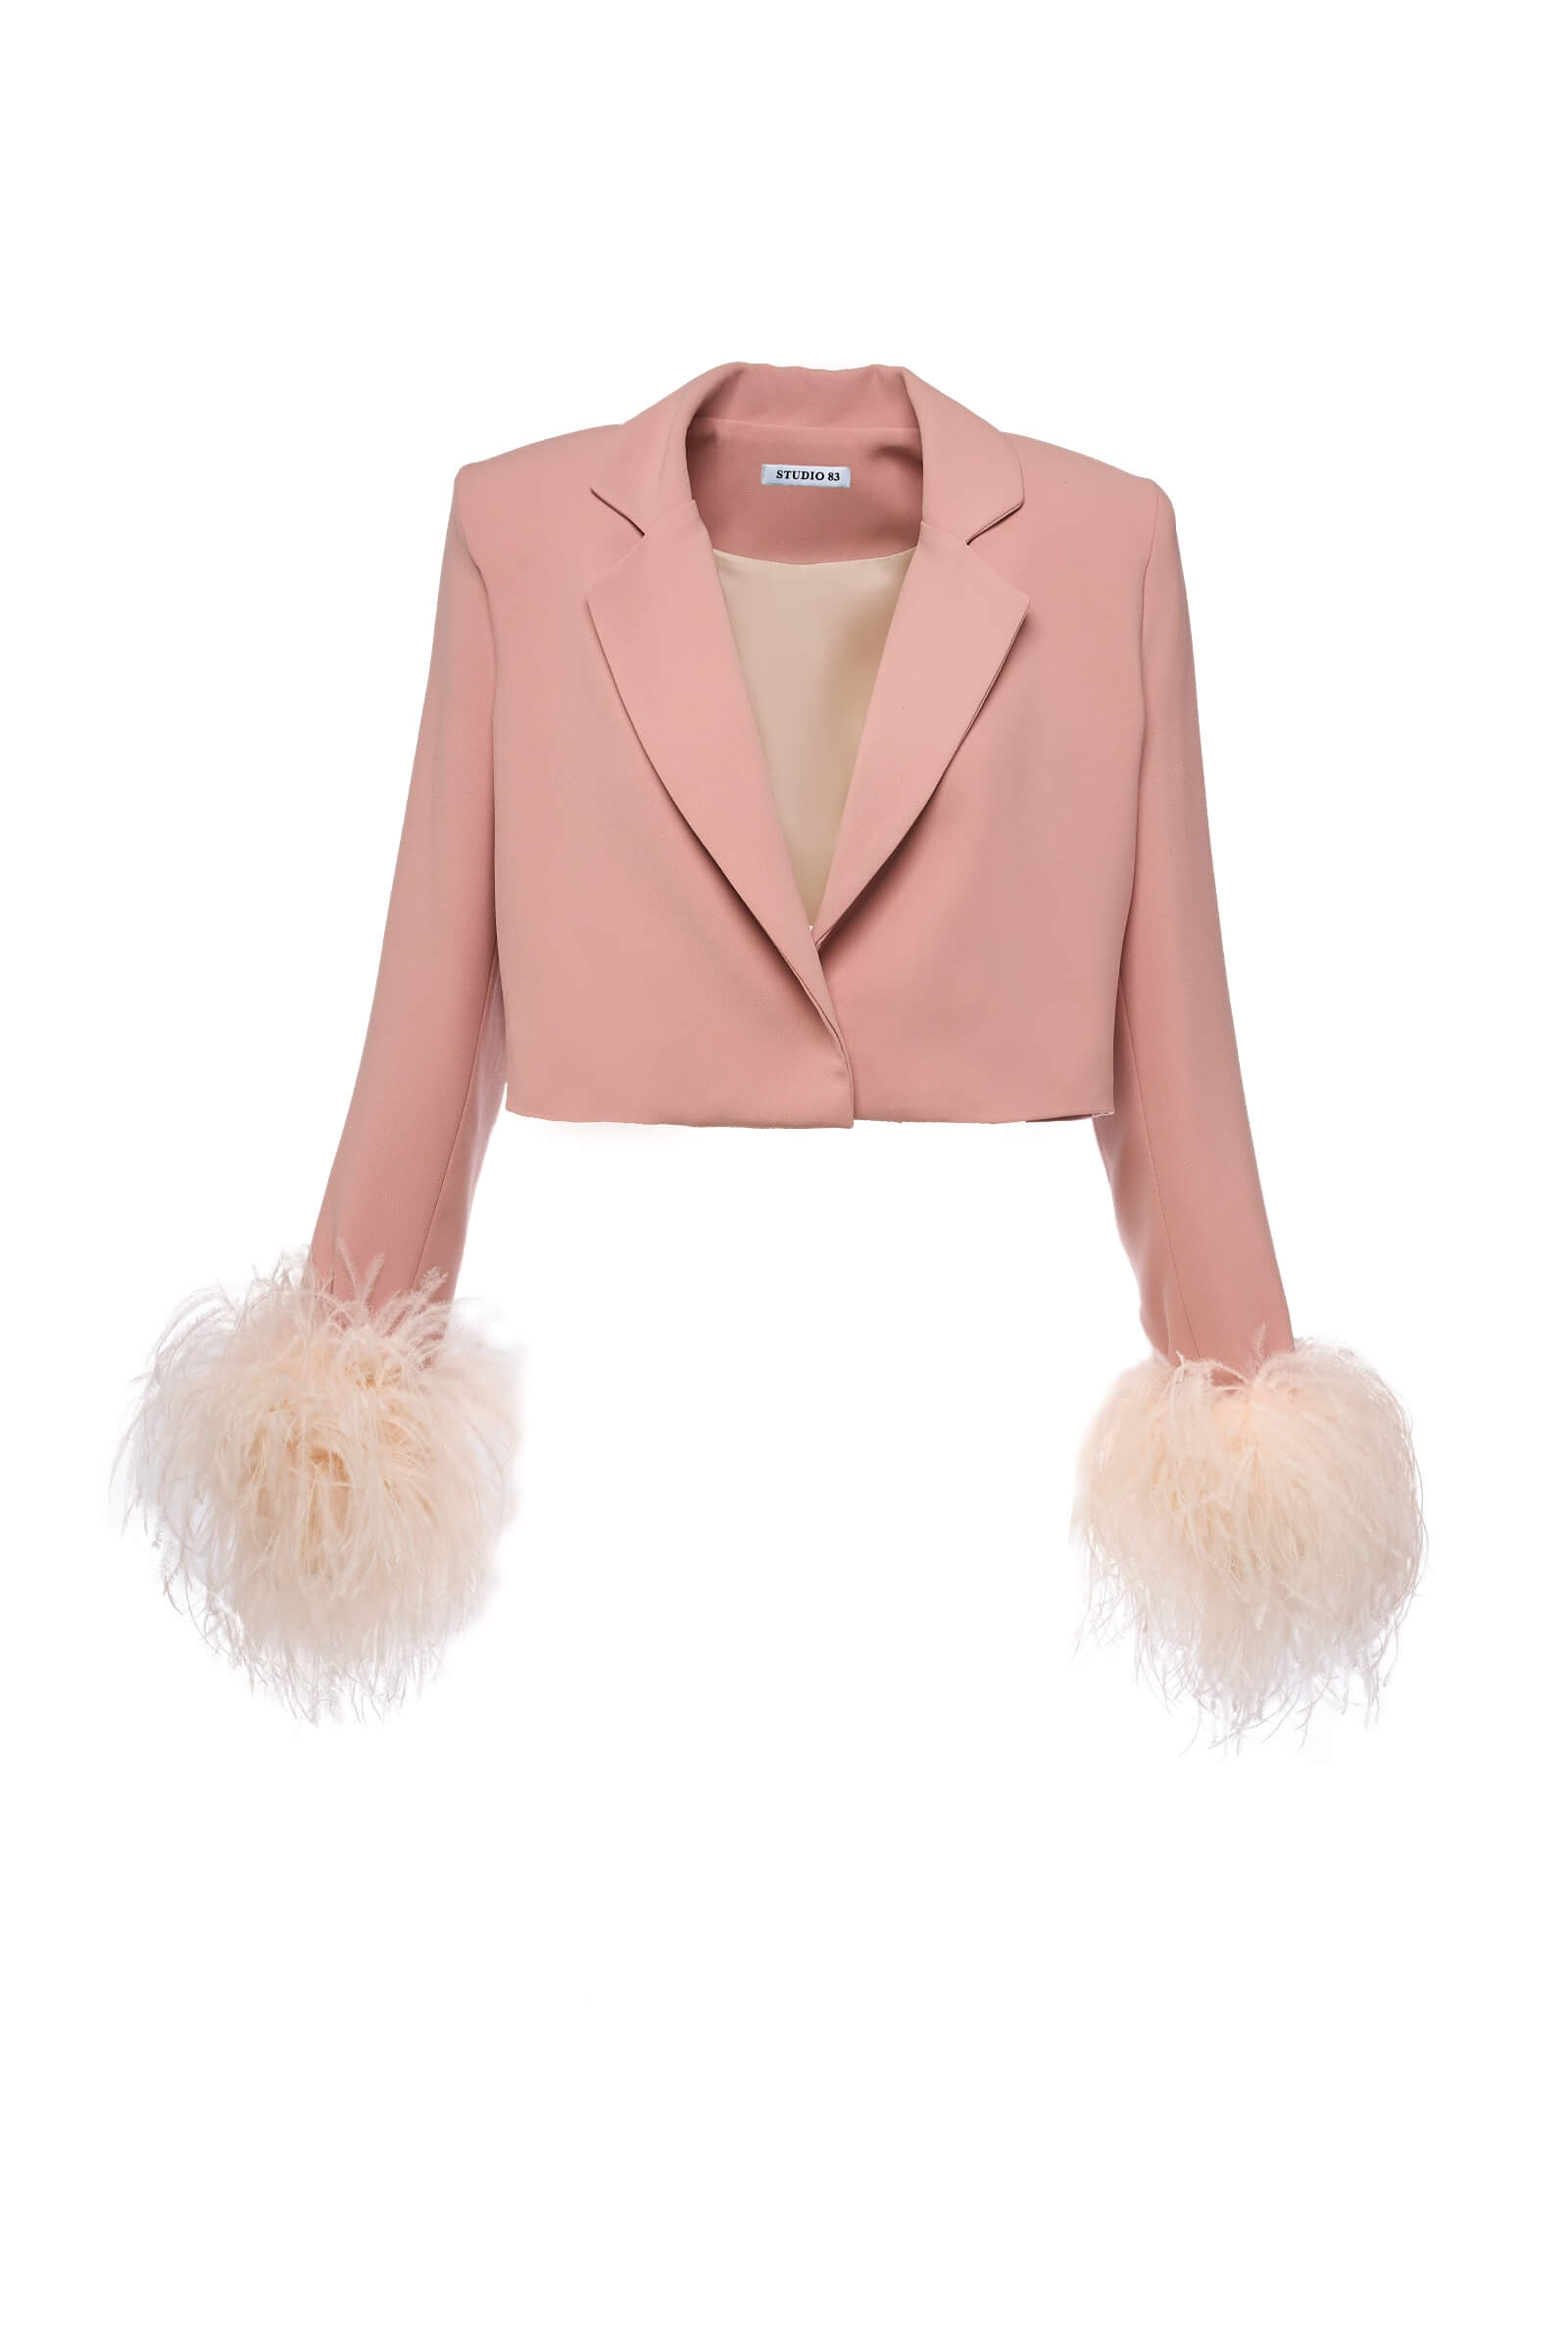 feathers-crop-jacket-dusty-pink-1